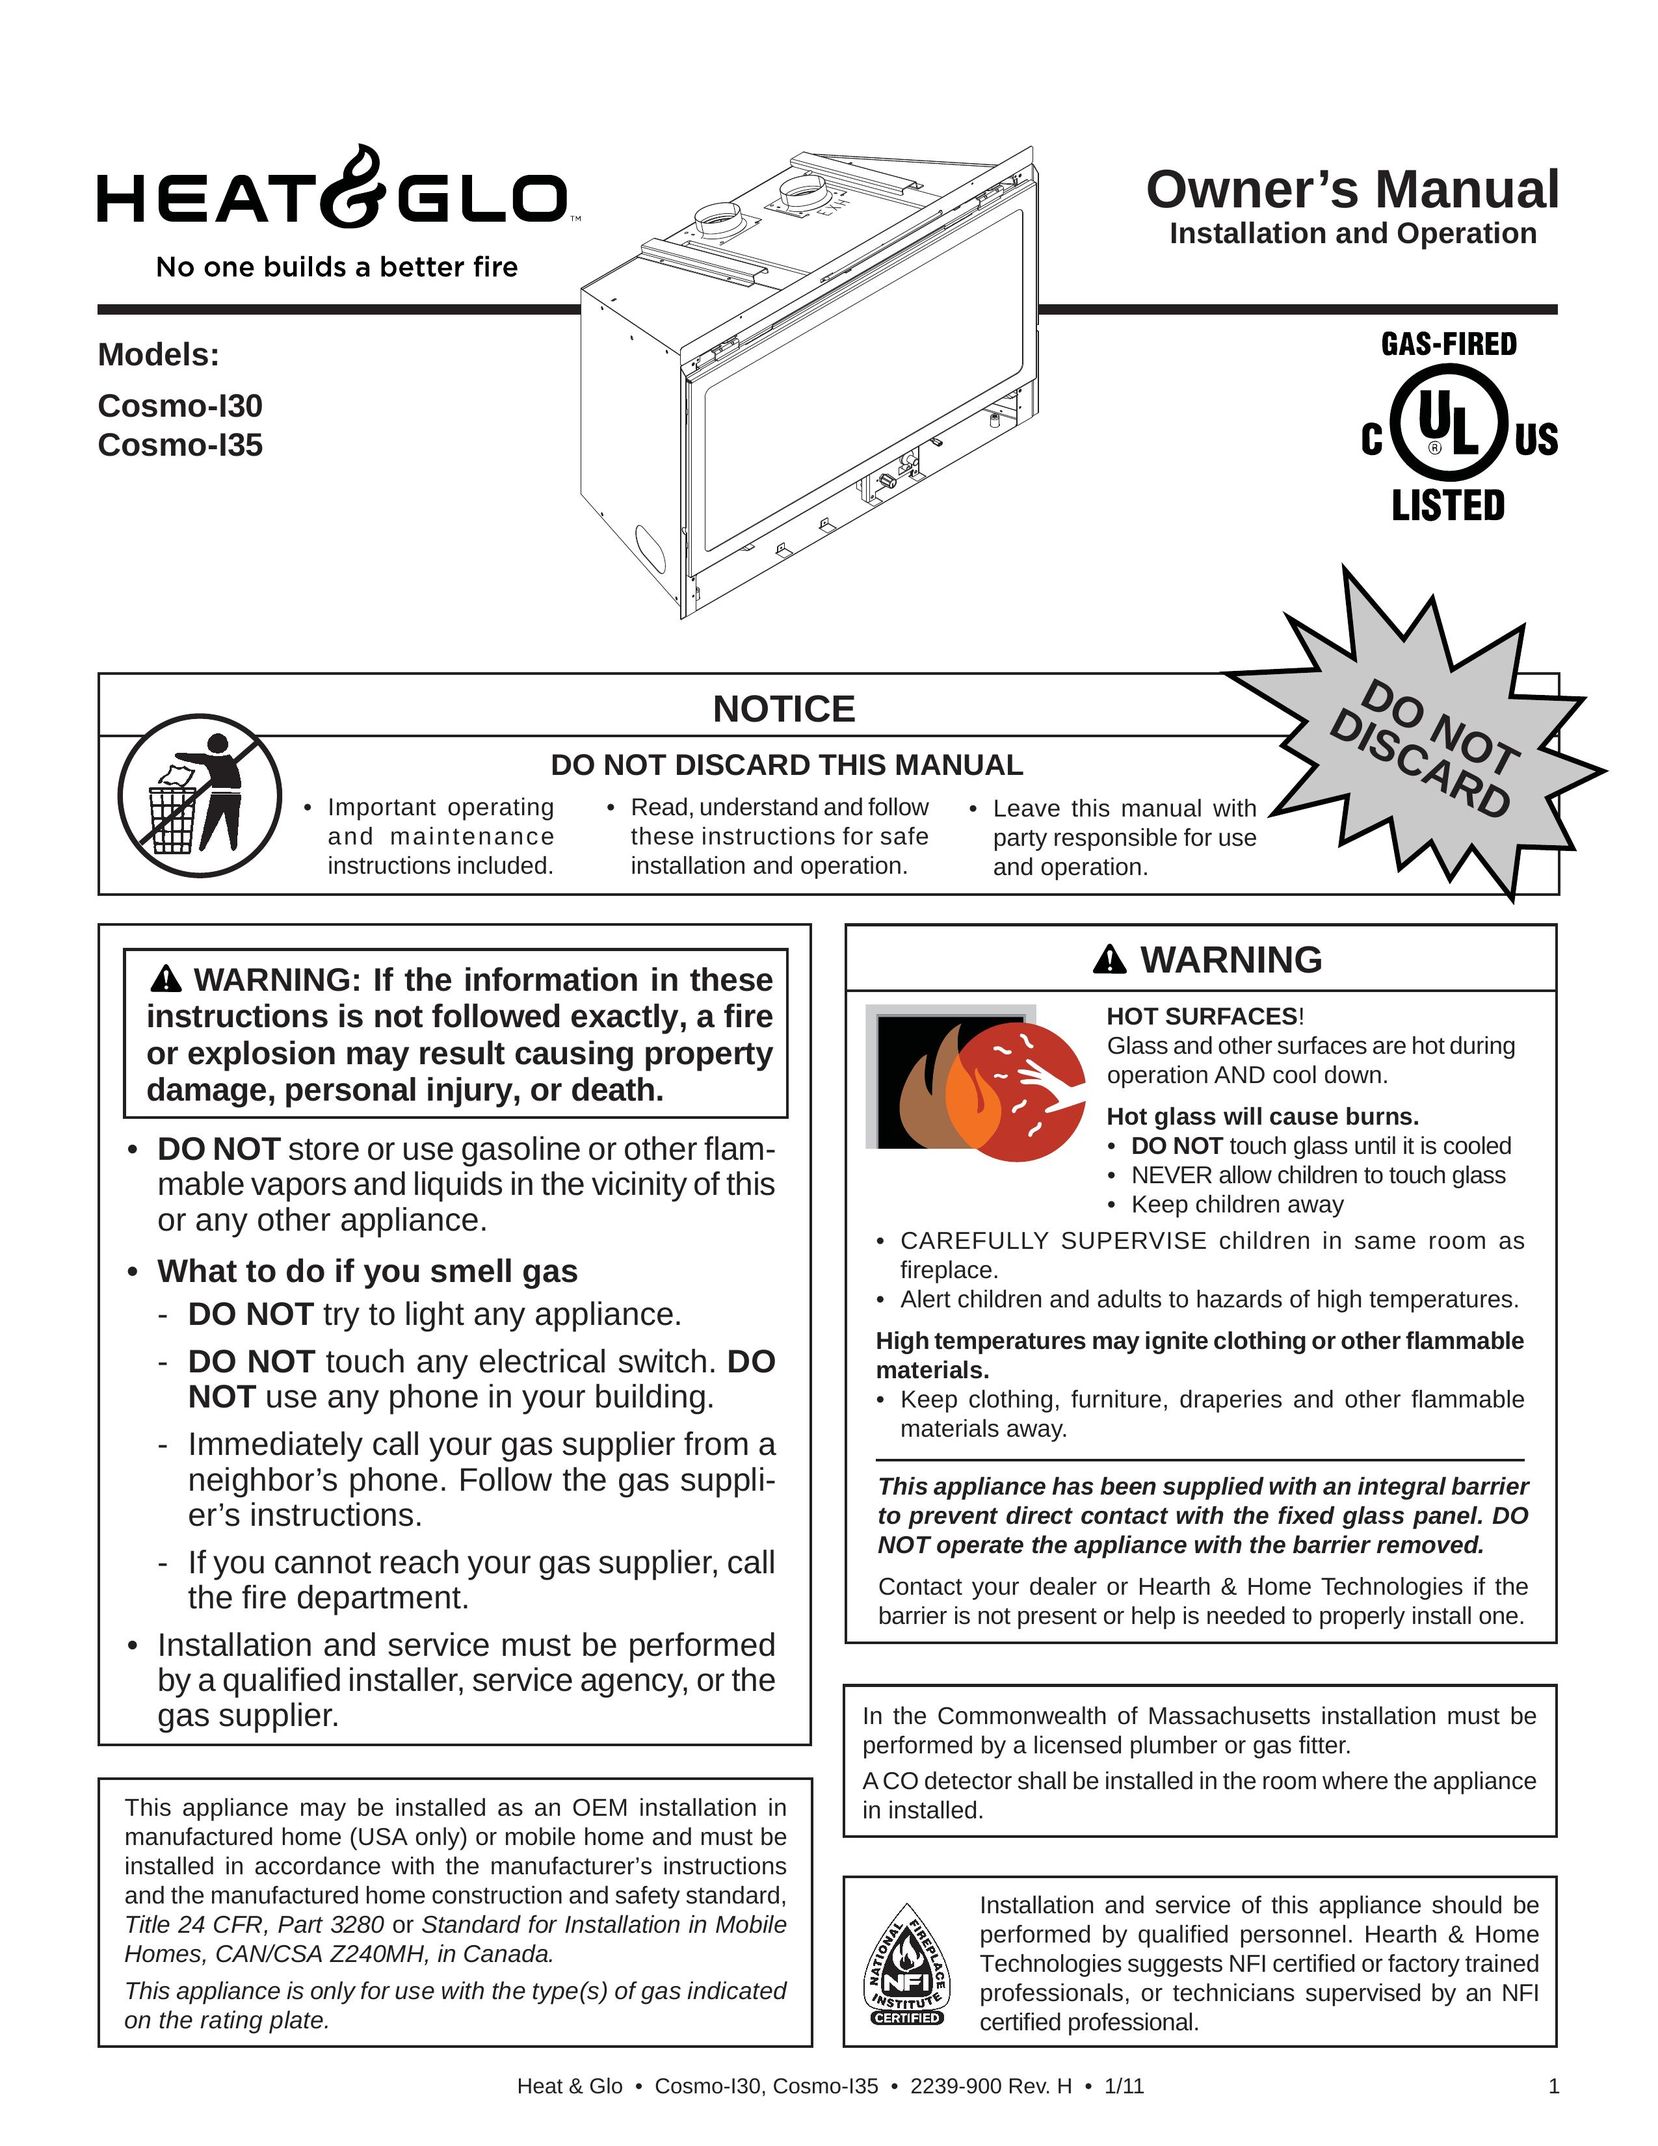 Heat & Glo LifeStyle COSMO-I30 Boiler User Manual